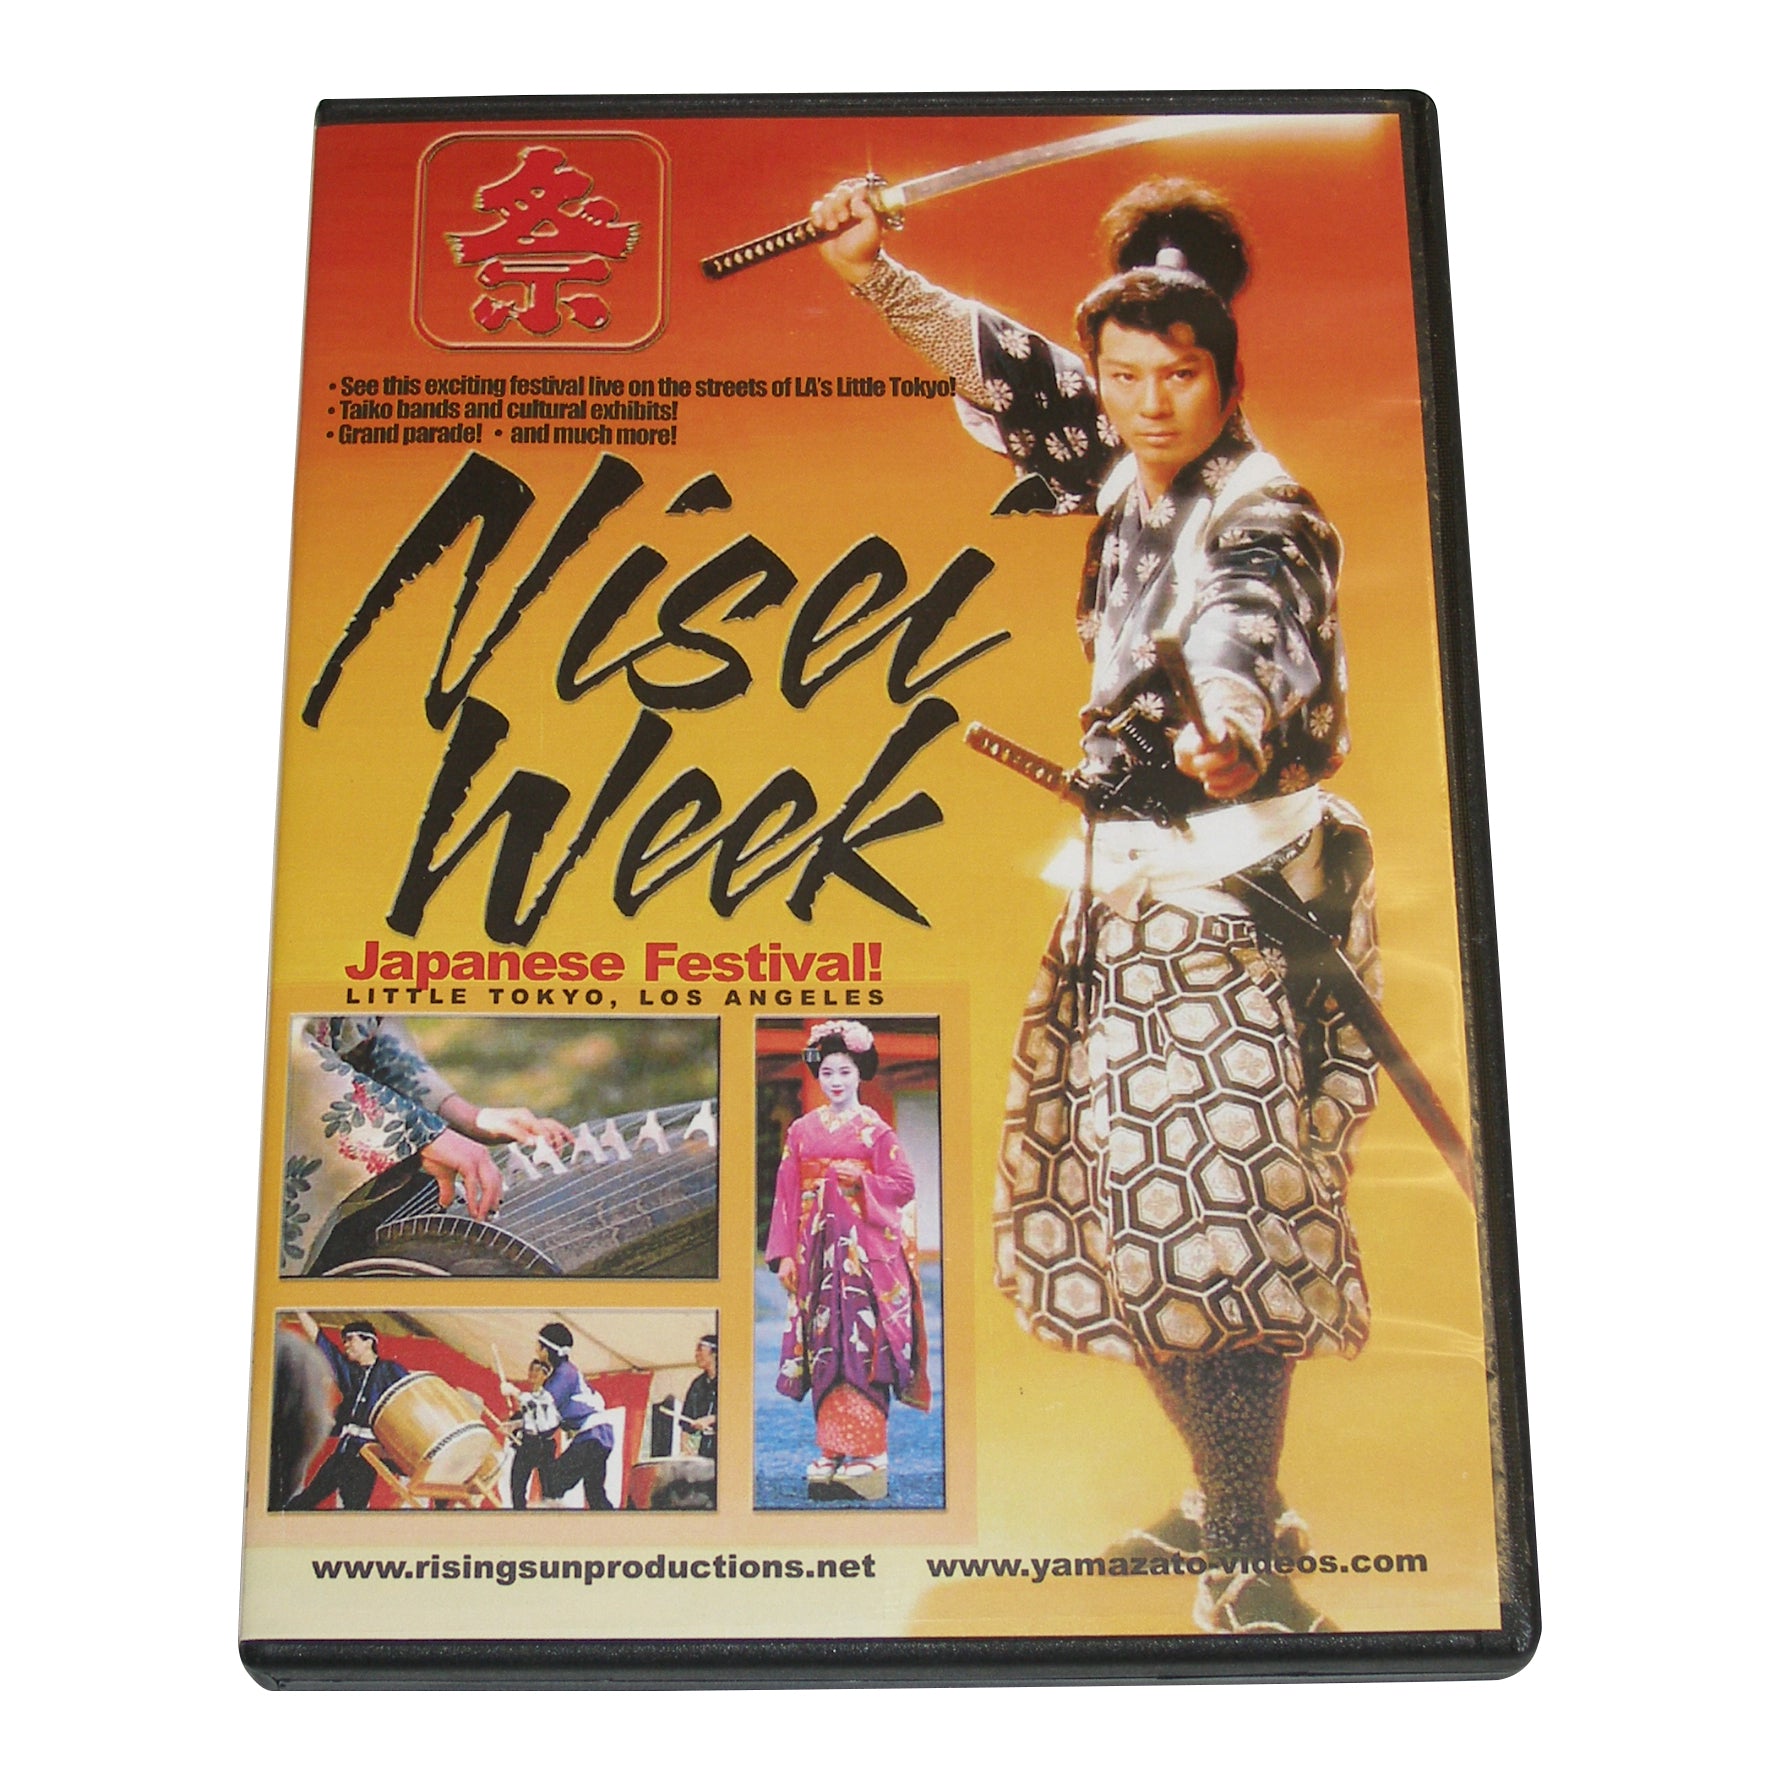 Nisei Week Los Angeles Japanese Festival DVD